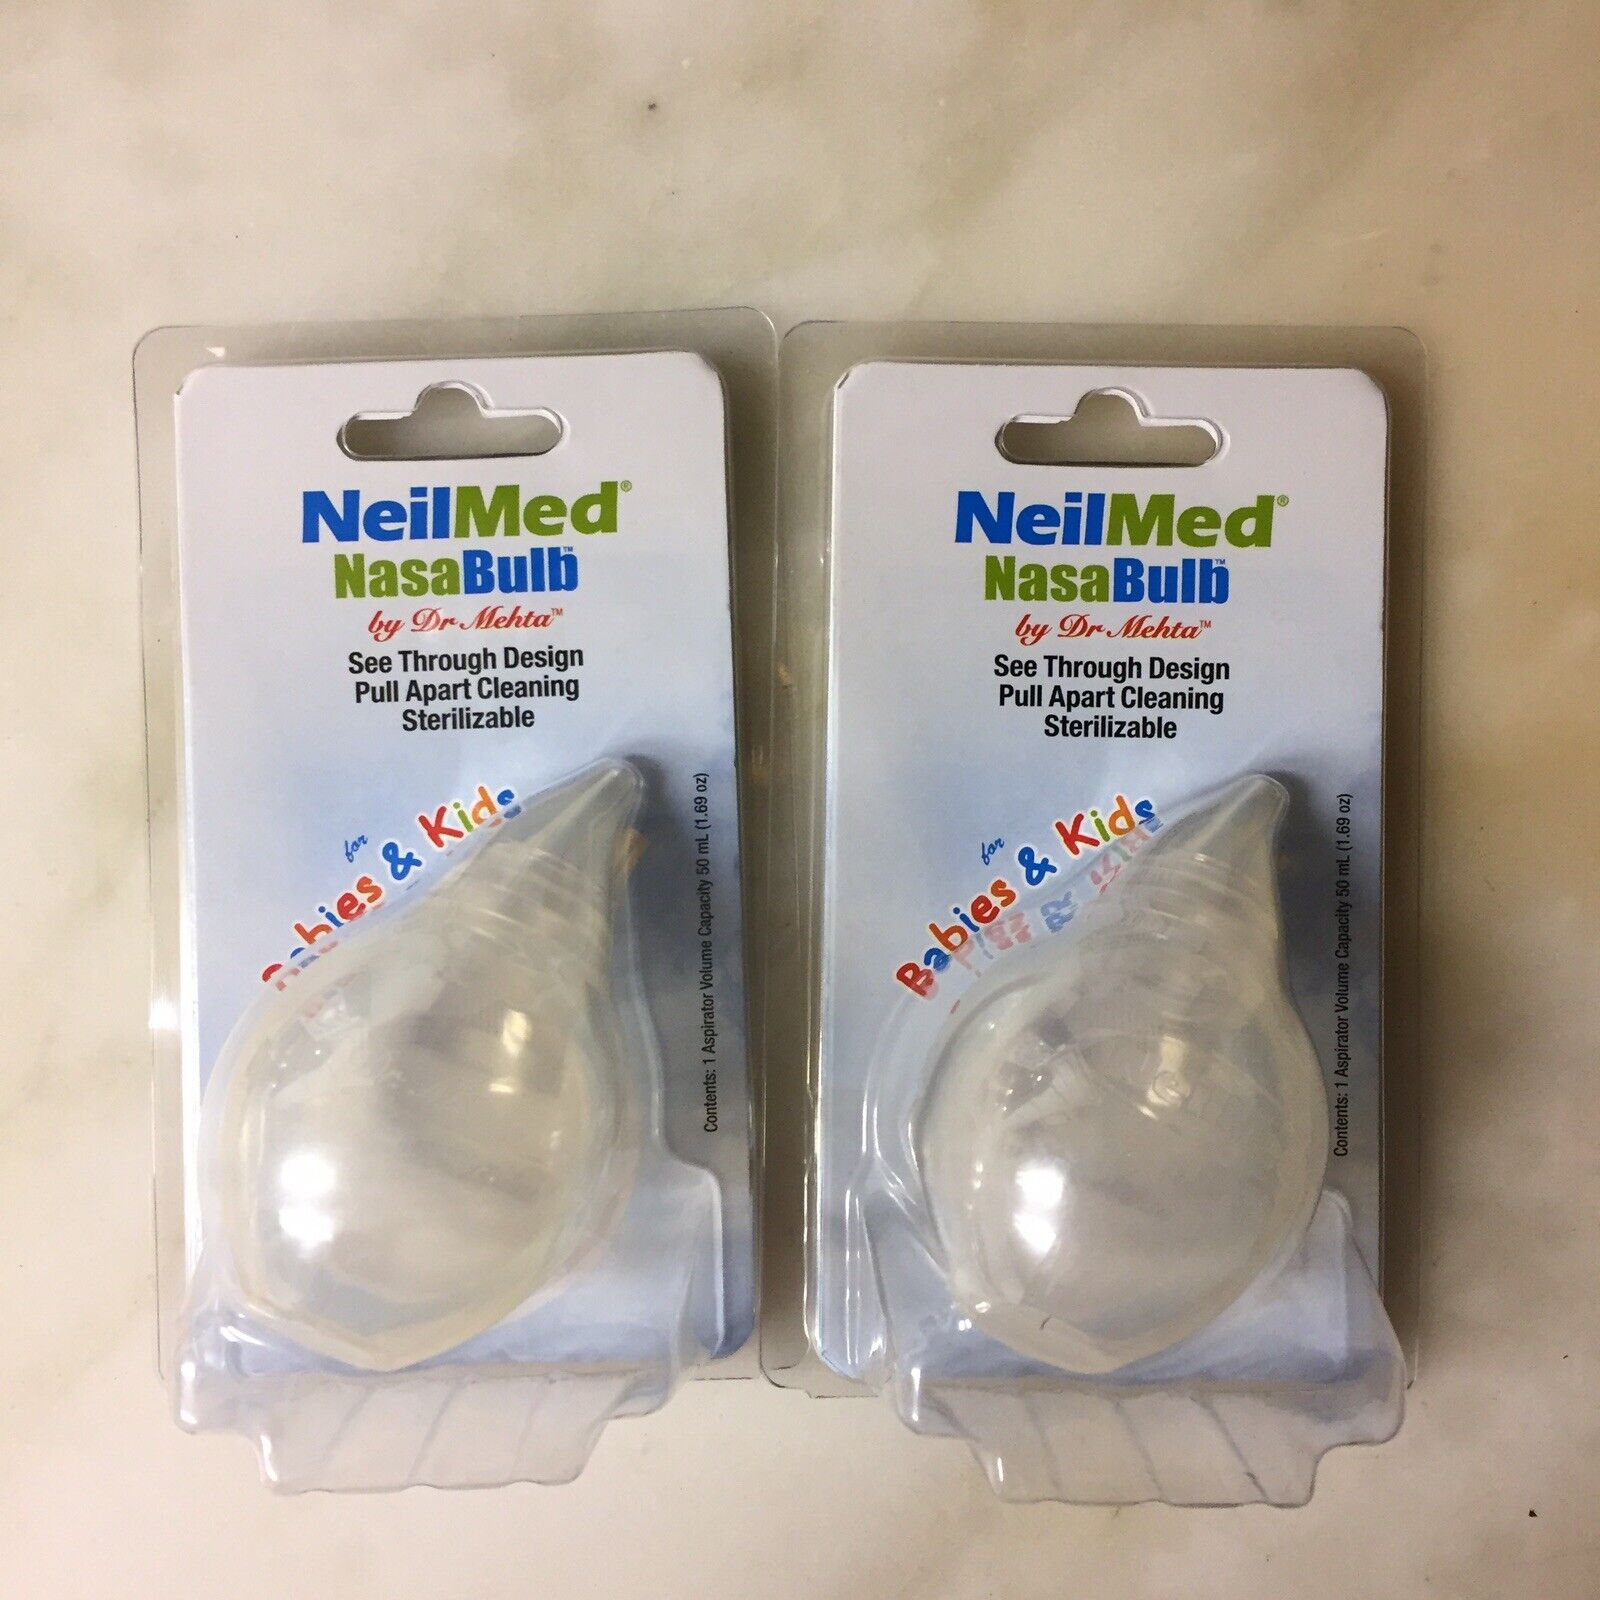 Baby Nose Aspirator 2 Pack Health Care Safety New Neilmed Nasabulb